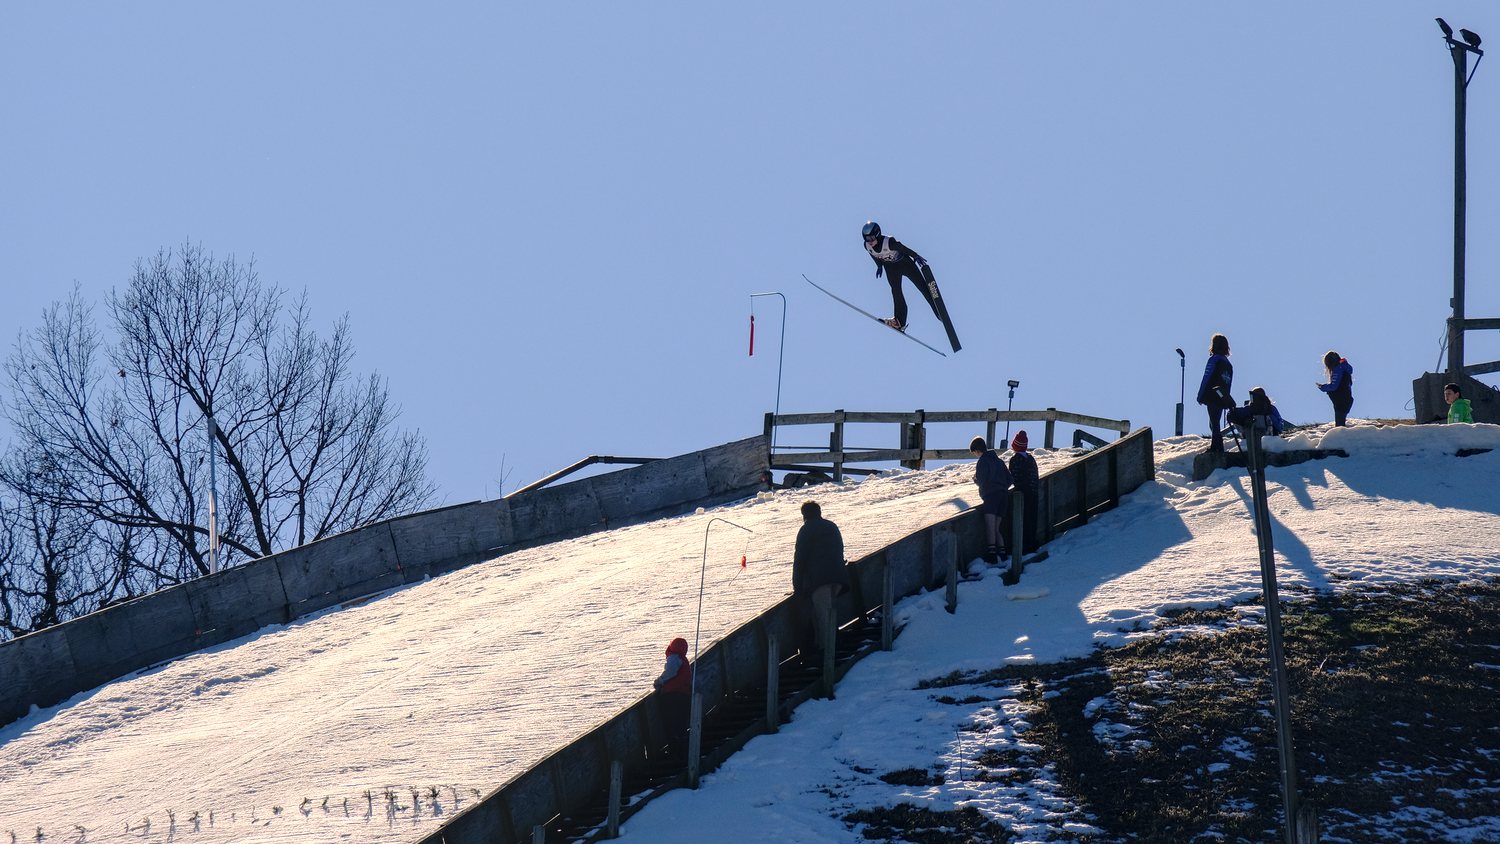 Isak Nichols of Norge Ski Club at the118th Annual Norge Ski Club Winter Tournament.